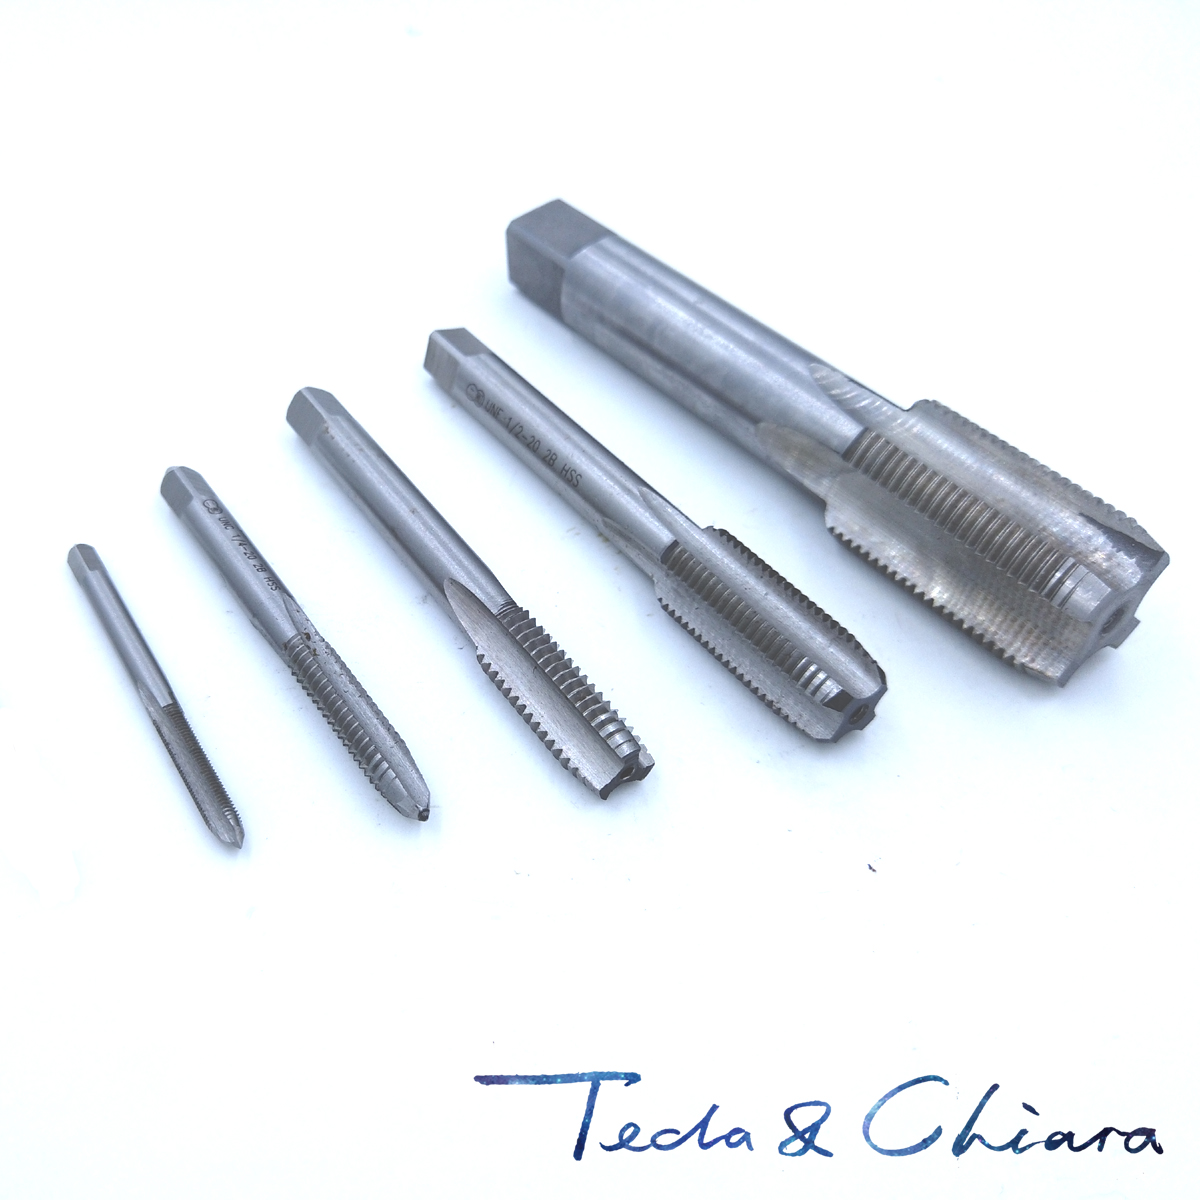 3pcs M21 x 1.0 mm Metric Right Hand Die Threading Tools,M21 x 1.5mm,M21 x 1.25 mm